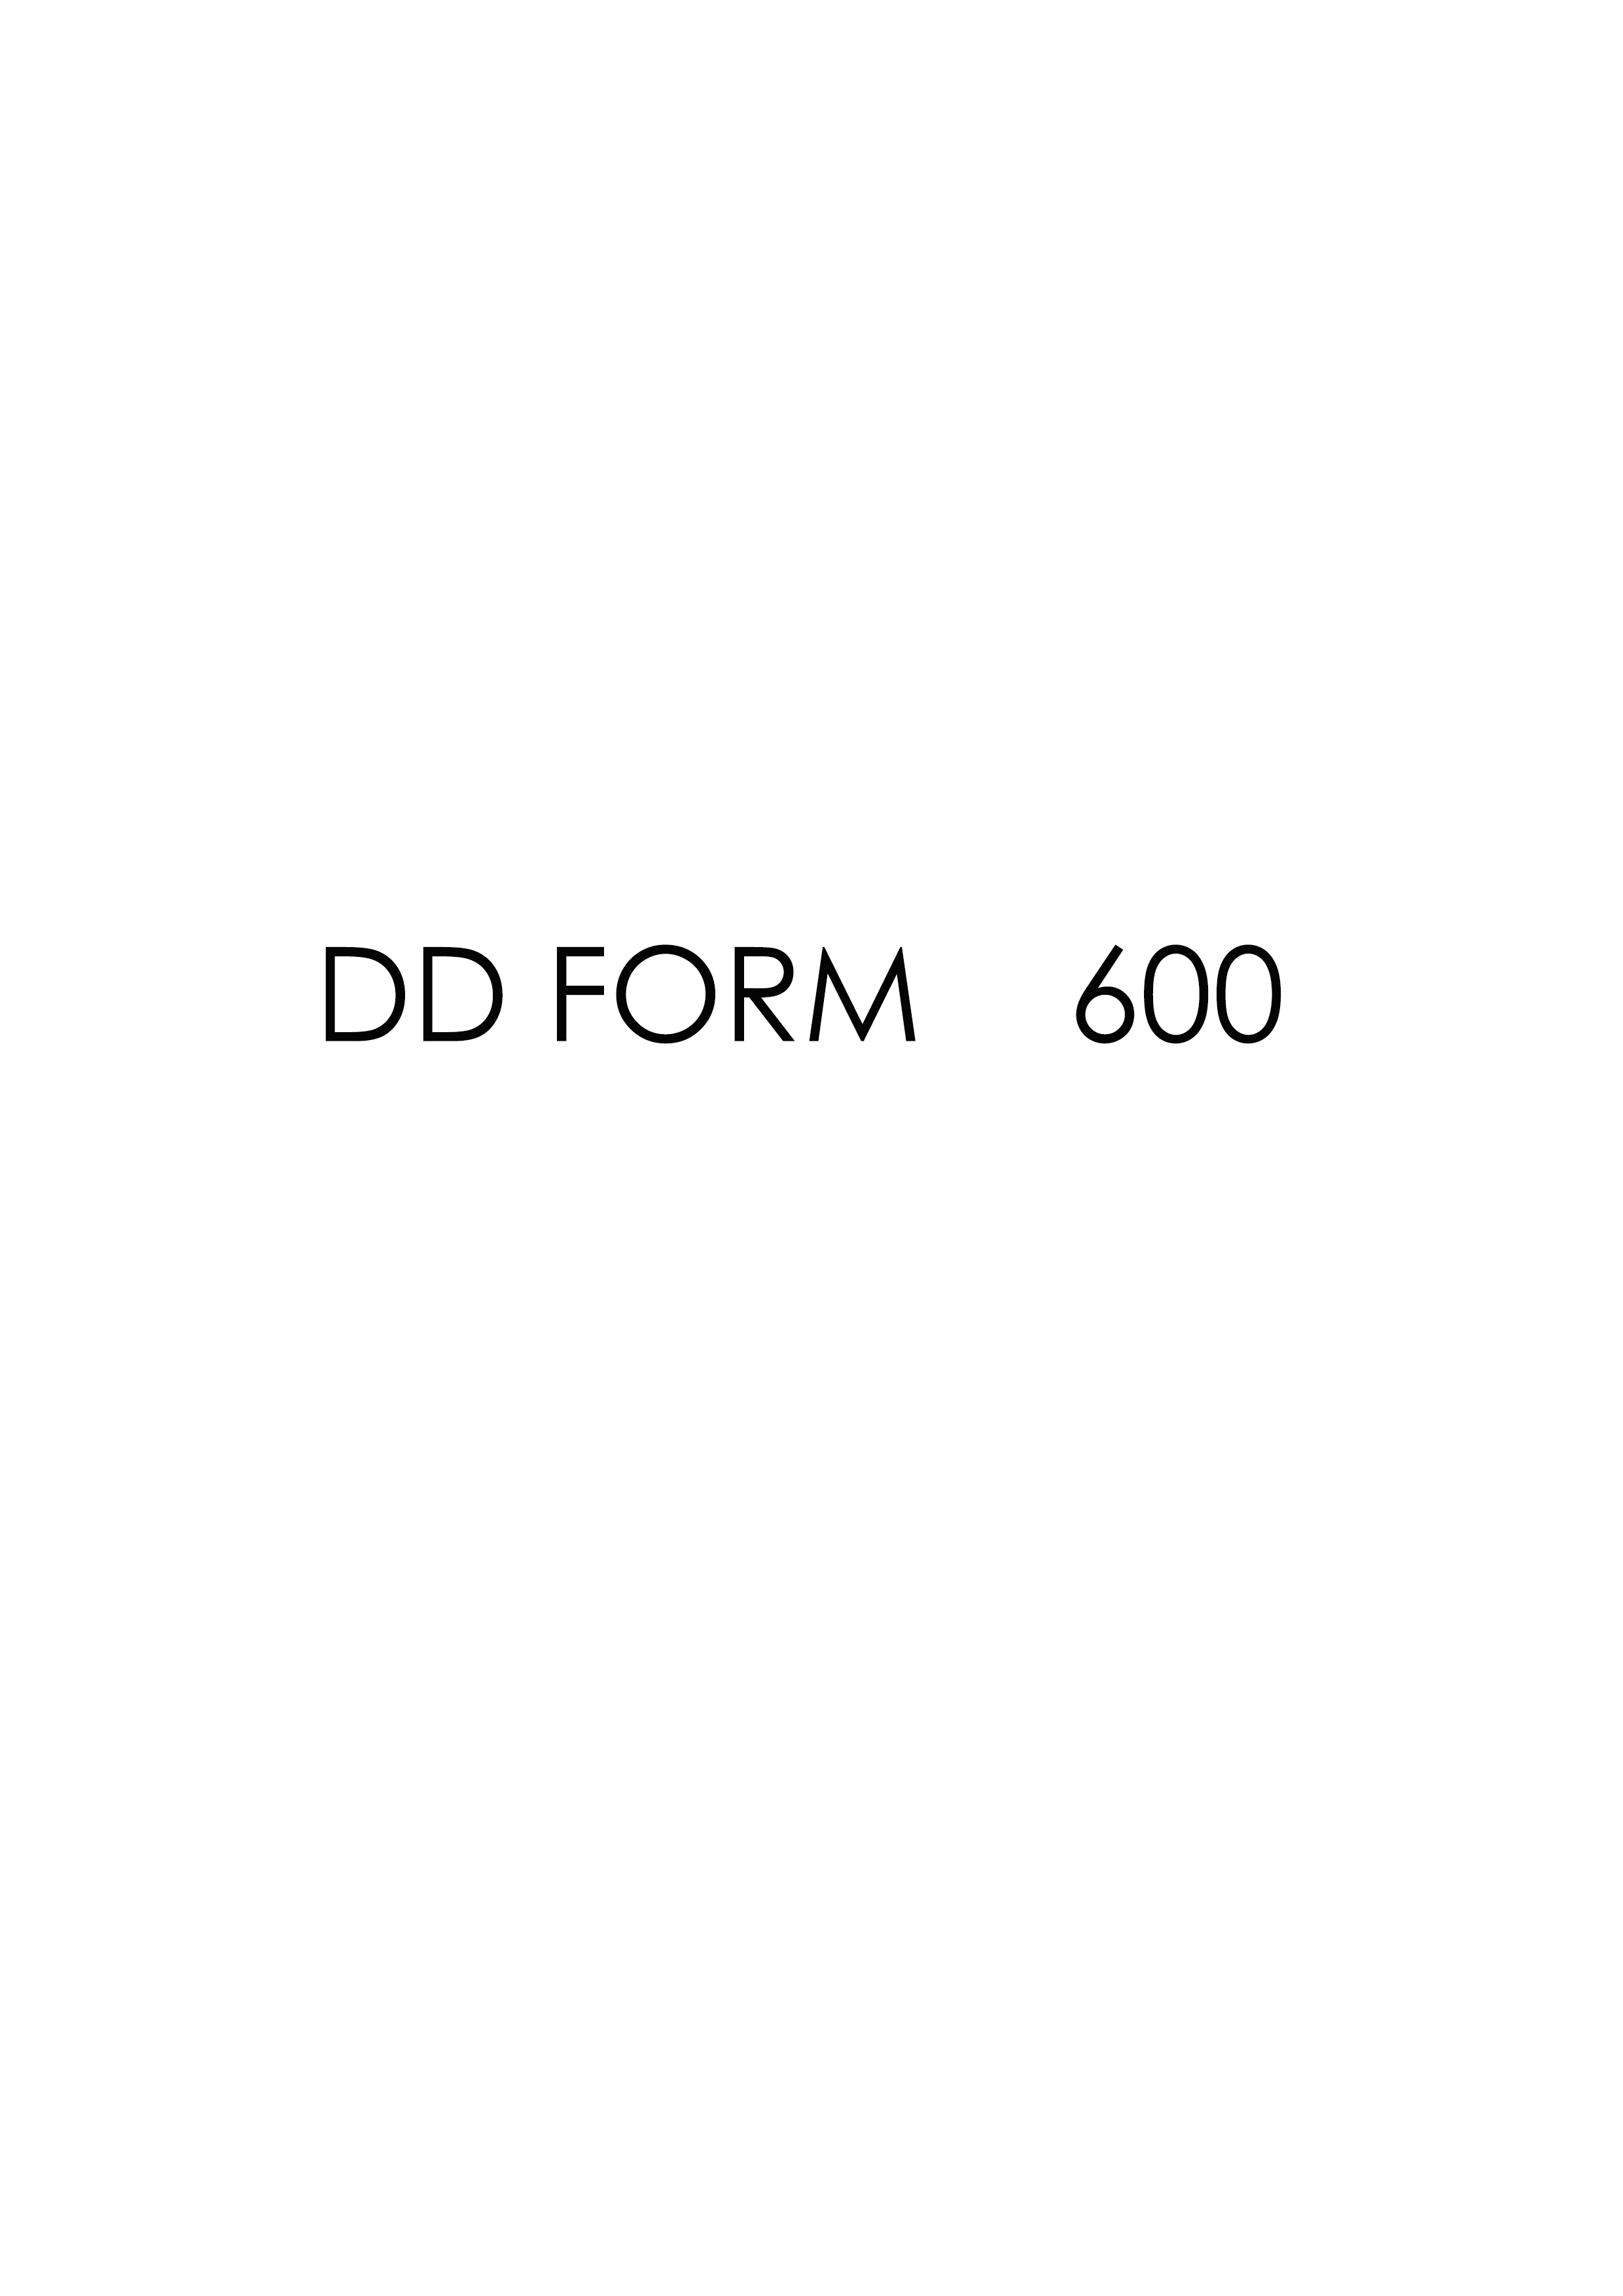 Download dd 600 Form